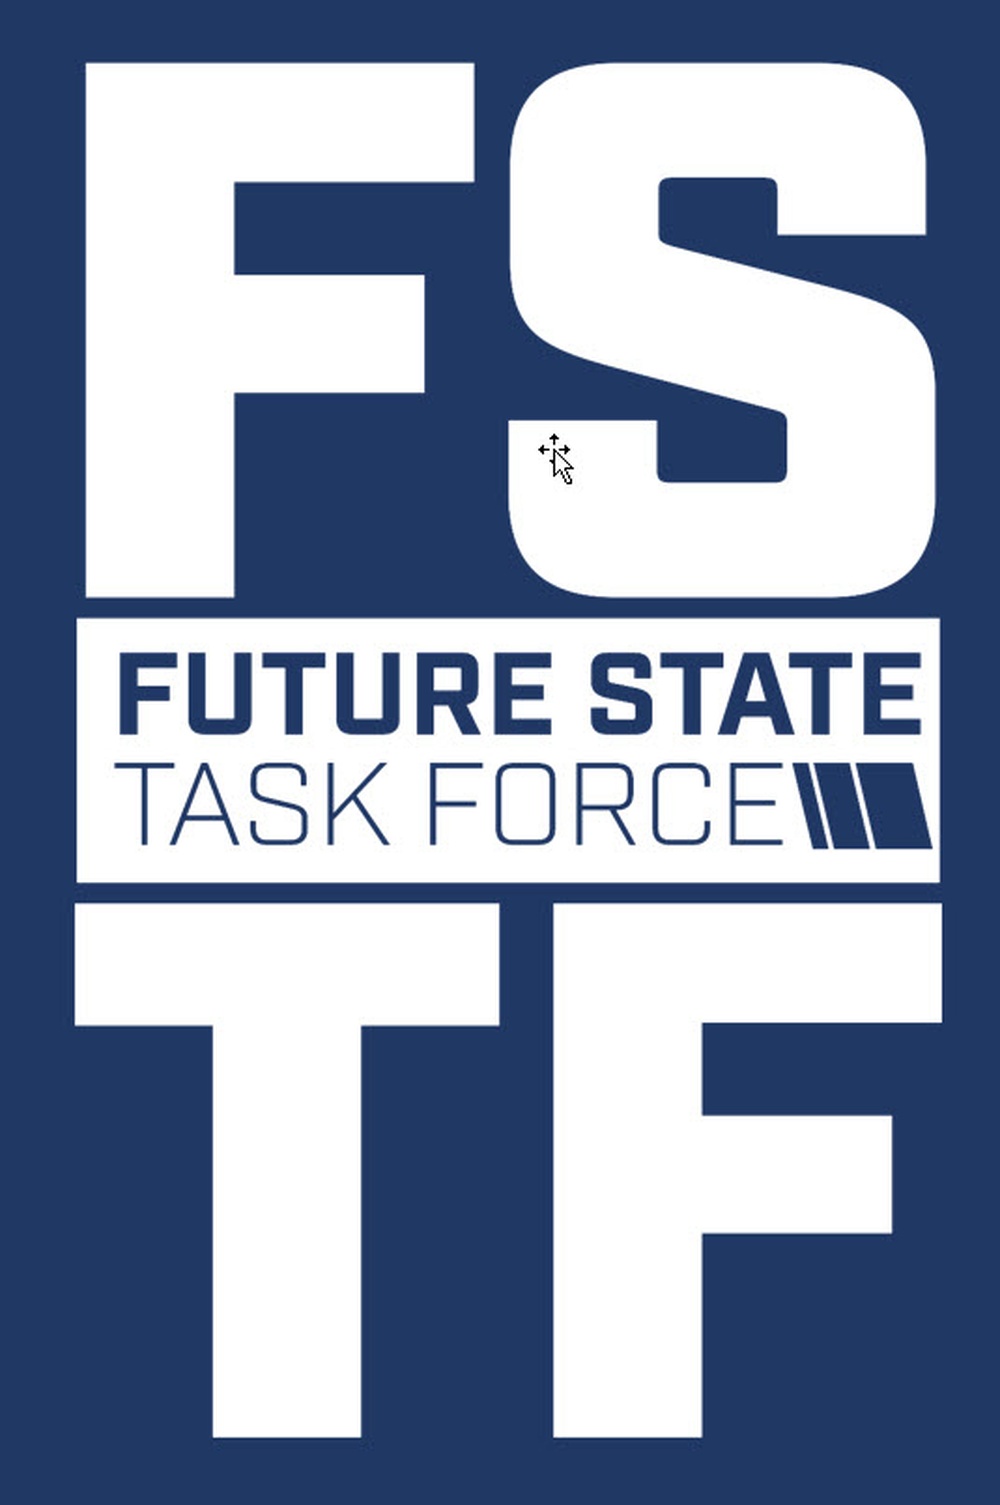 Future State Task Force logo